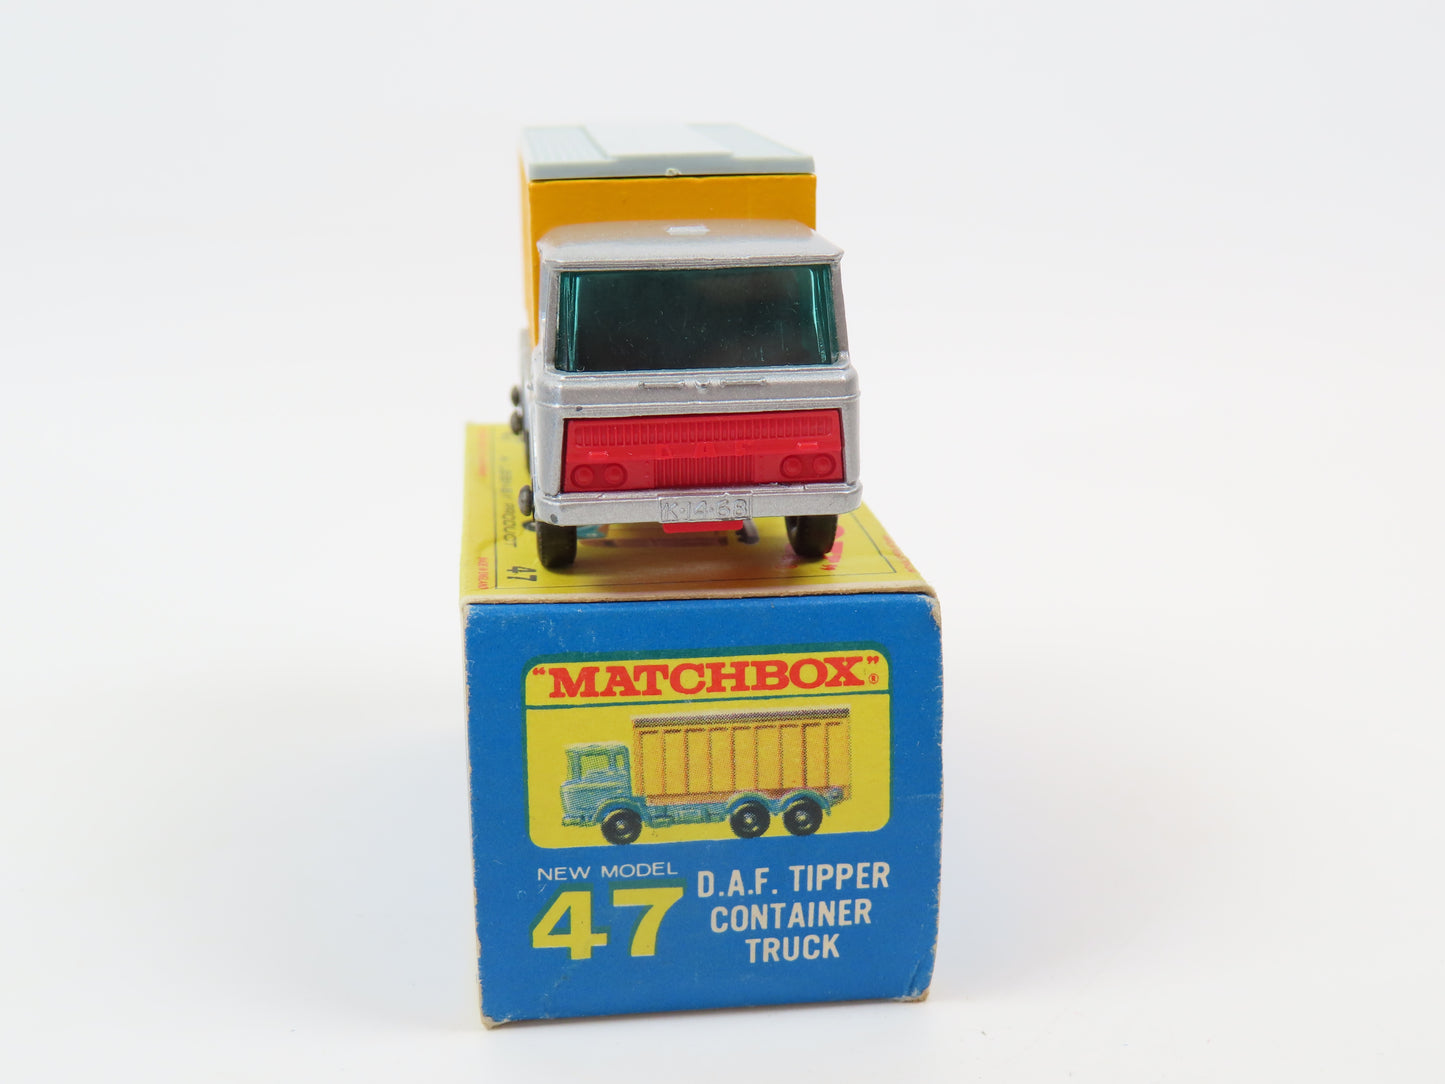 Matchbox 47 D.A.F. Tipper Container Truck, 99% Mint/Boxed!